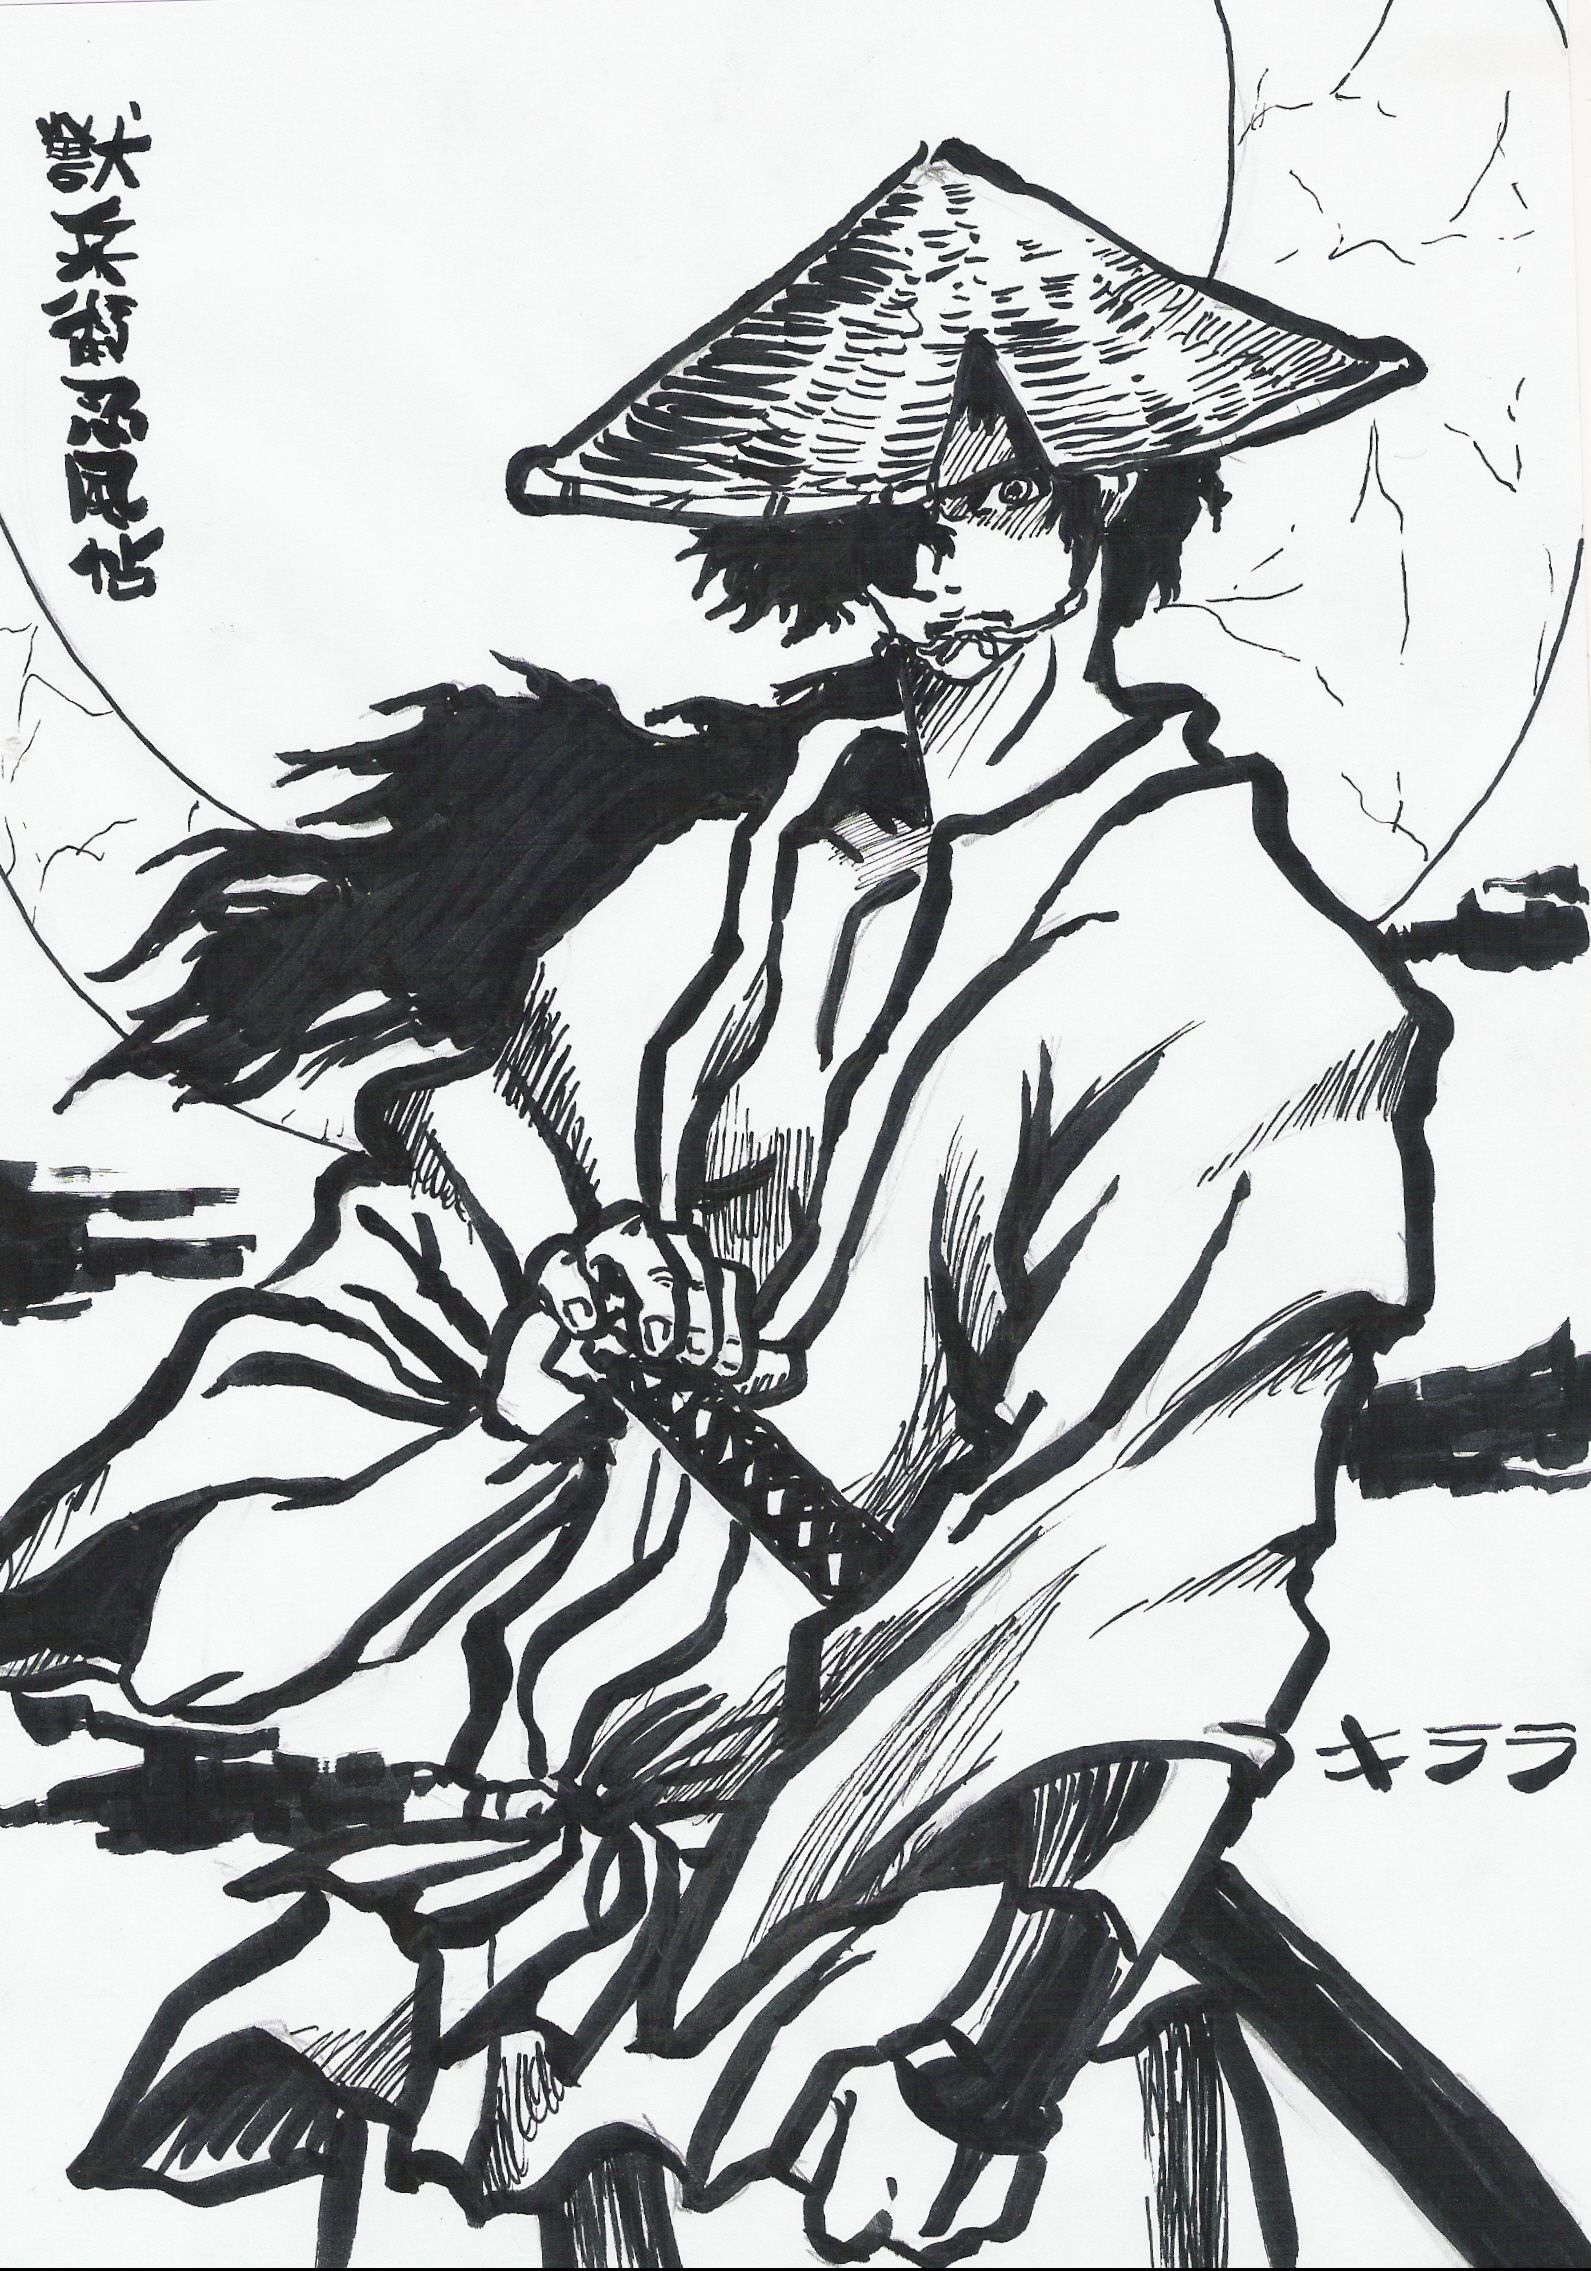 Jubei - Ninja Scroll by kyrara-88 on DeviantArt